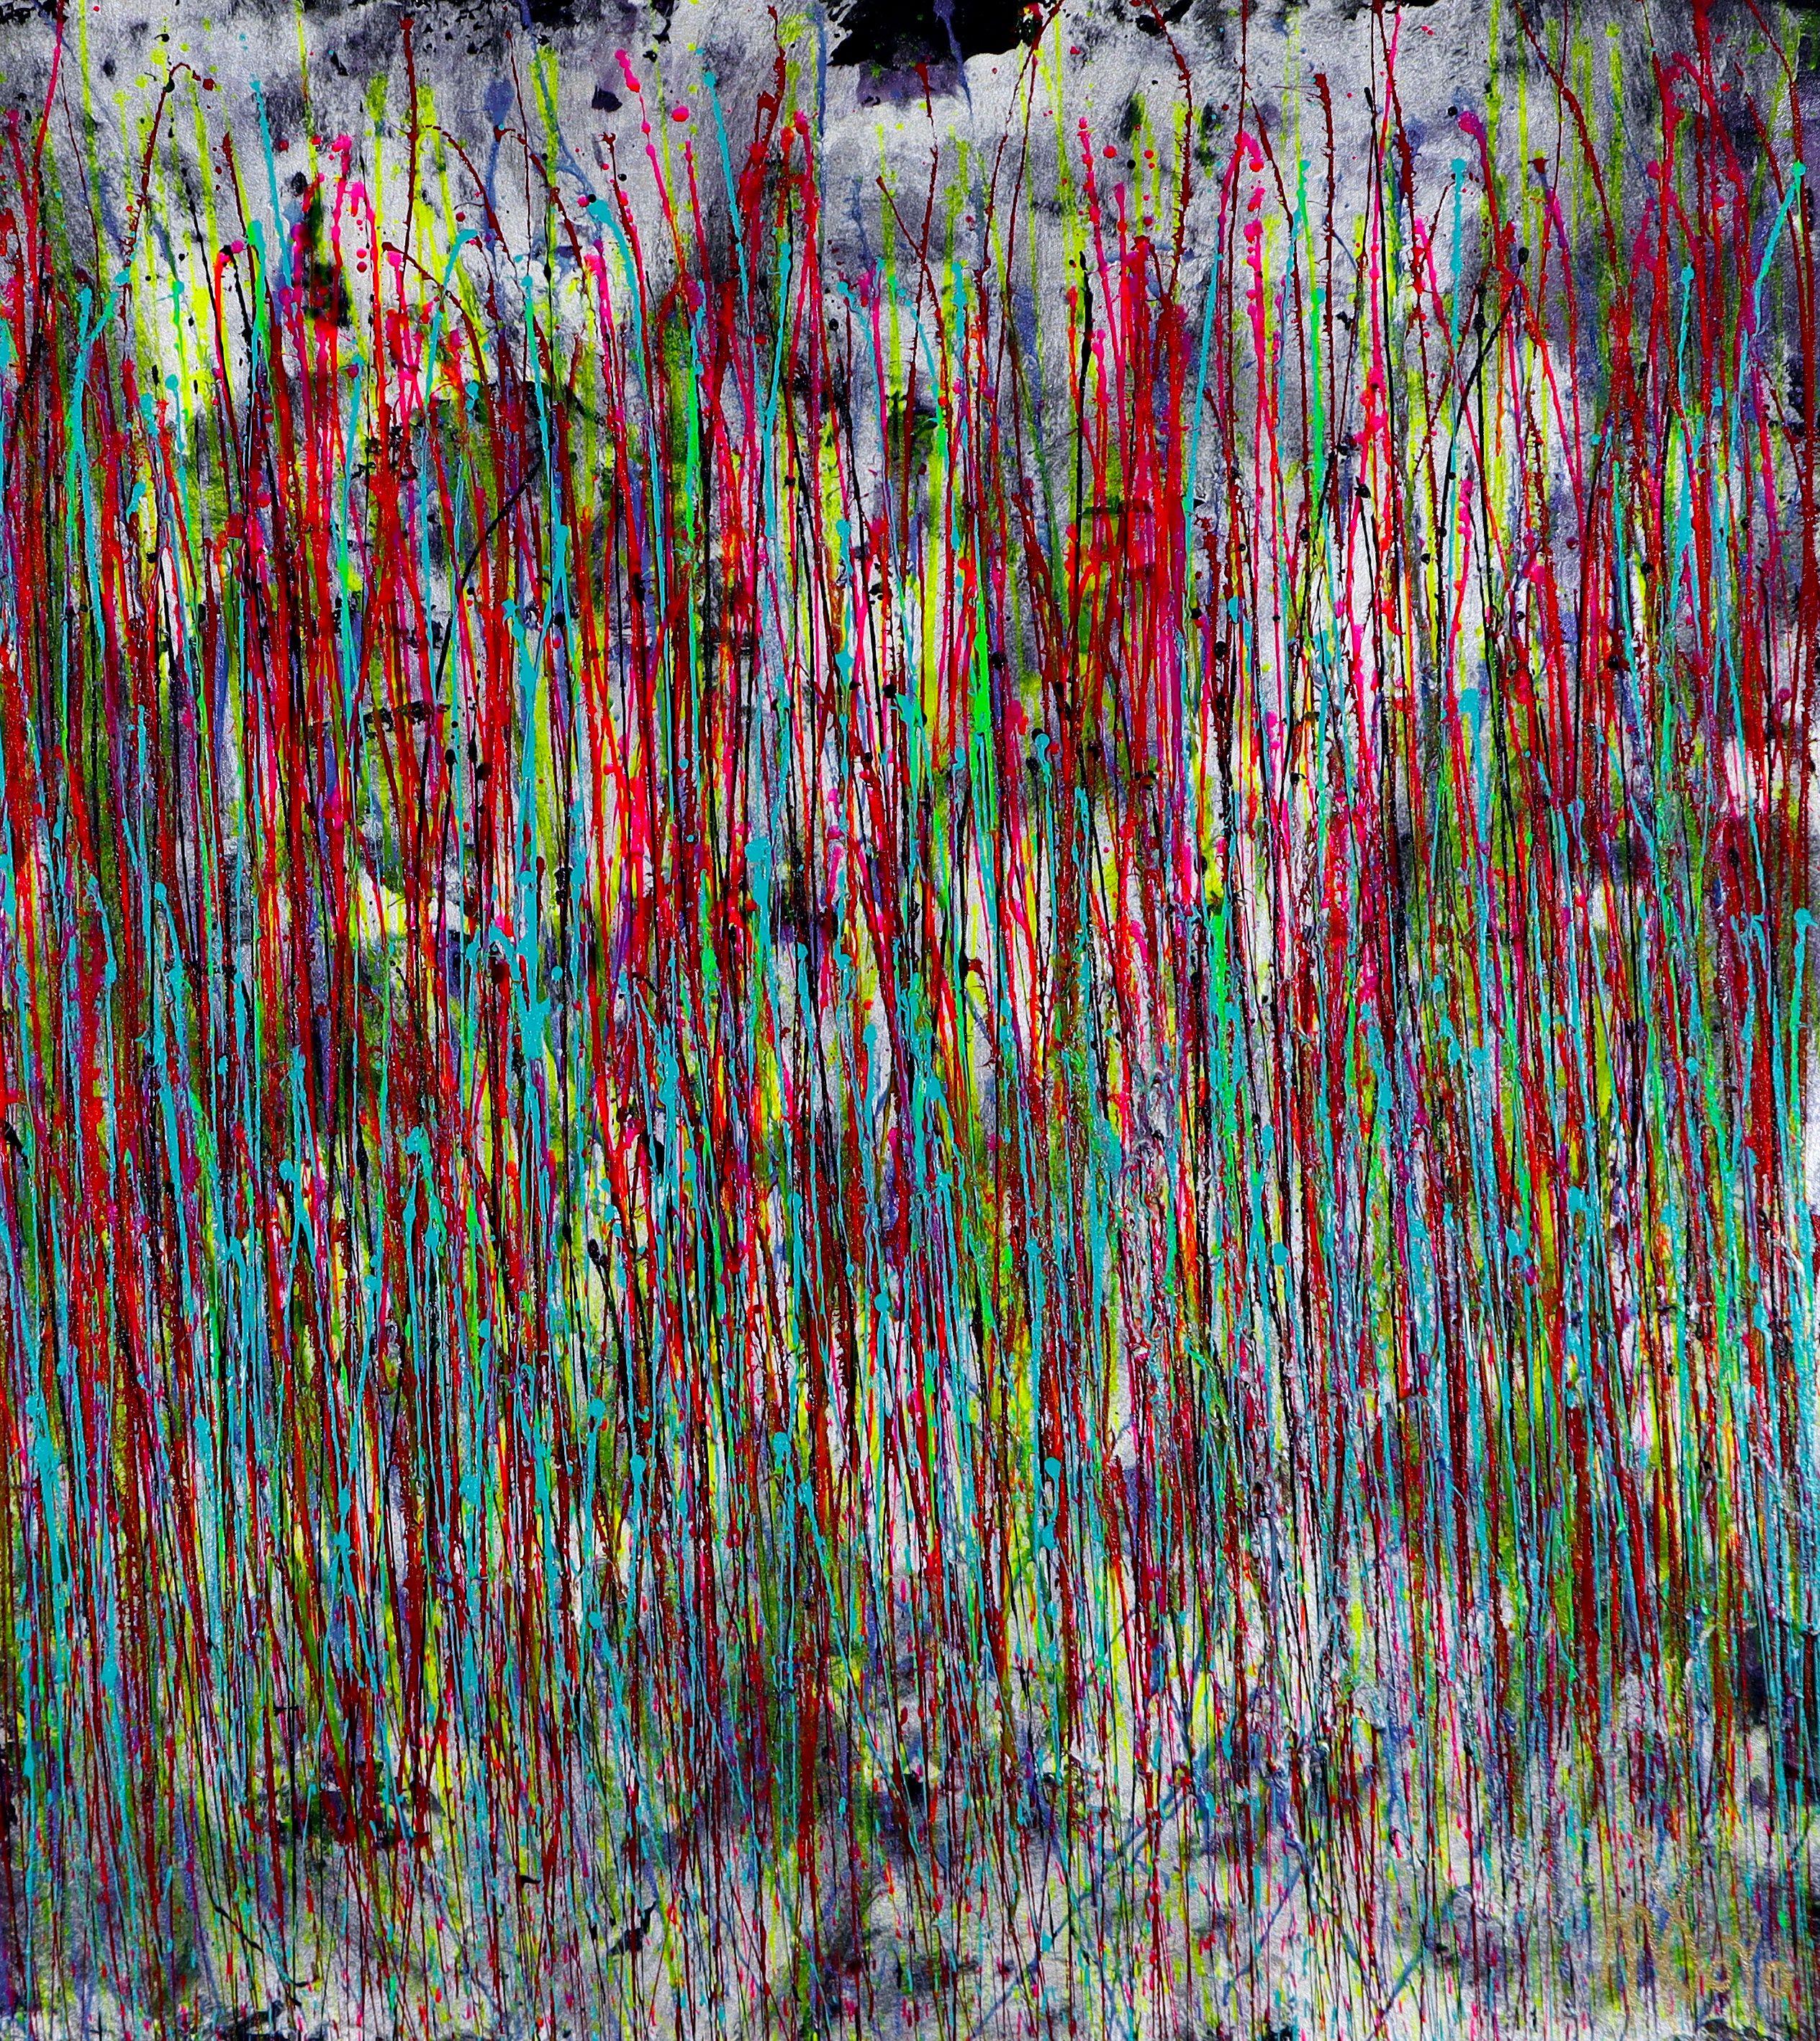 Volcanic lightning (Earth formations), Mixed Media on Canvas - Mixed Media Art by Nestor Toro